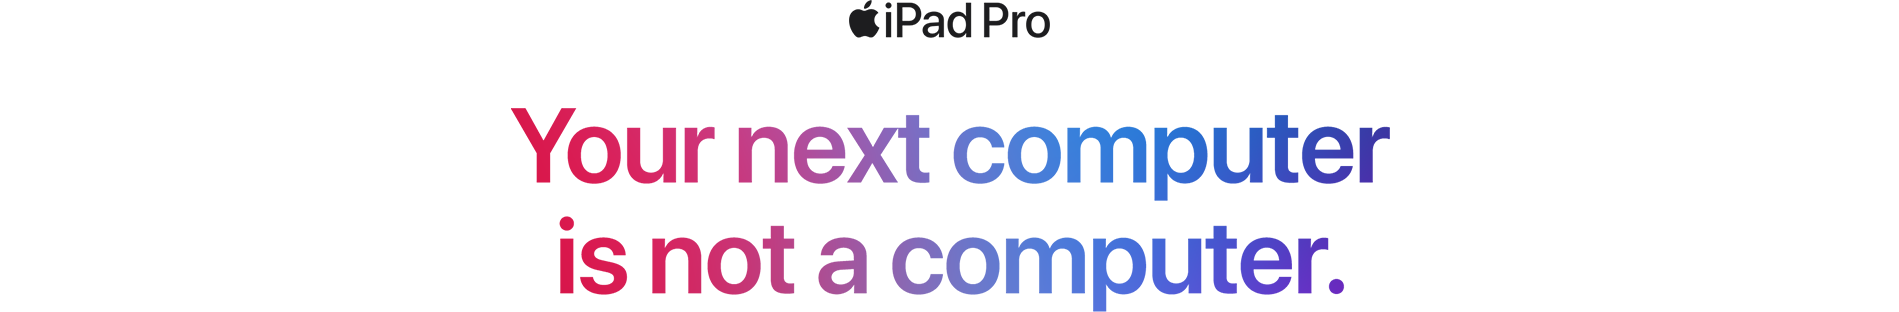 iPad Pro | SoftBank